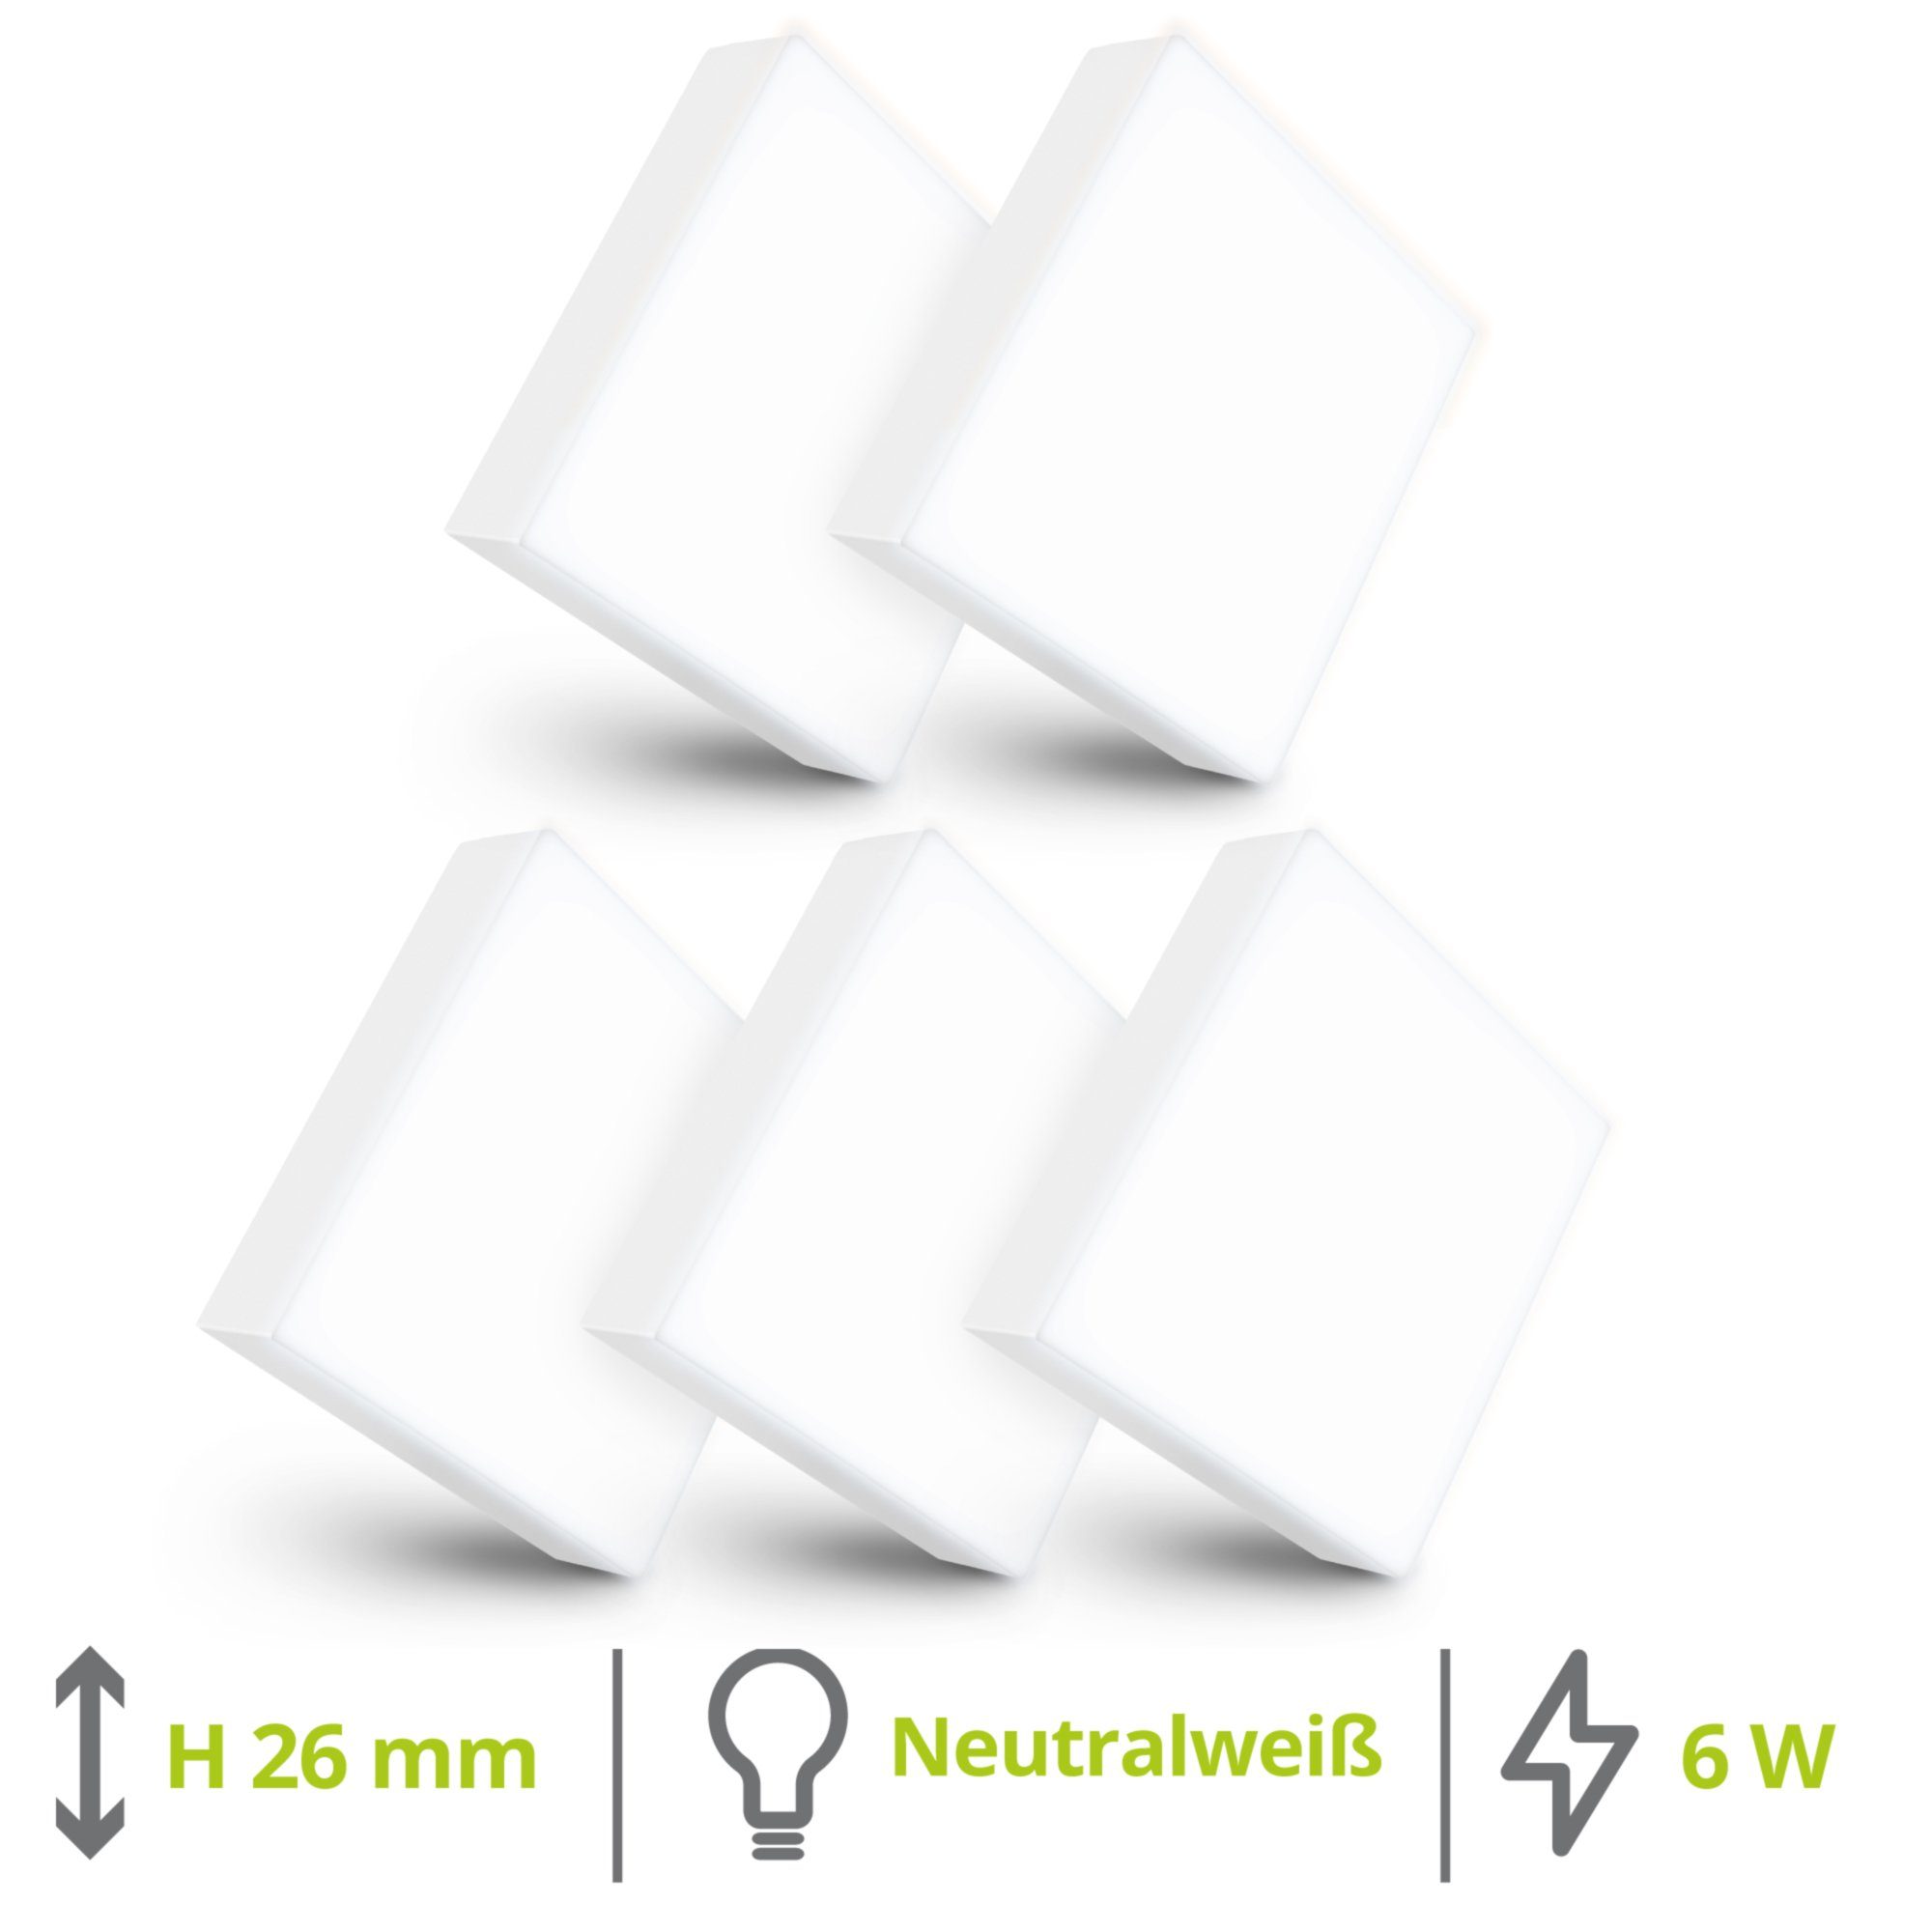 linovum LED Aufbaustrahler »Mini LED Aufbauspot paniled quadratisch im 5er  Set - 6W neutralweiß Aufbauleuchte 230V«